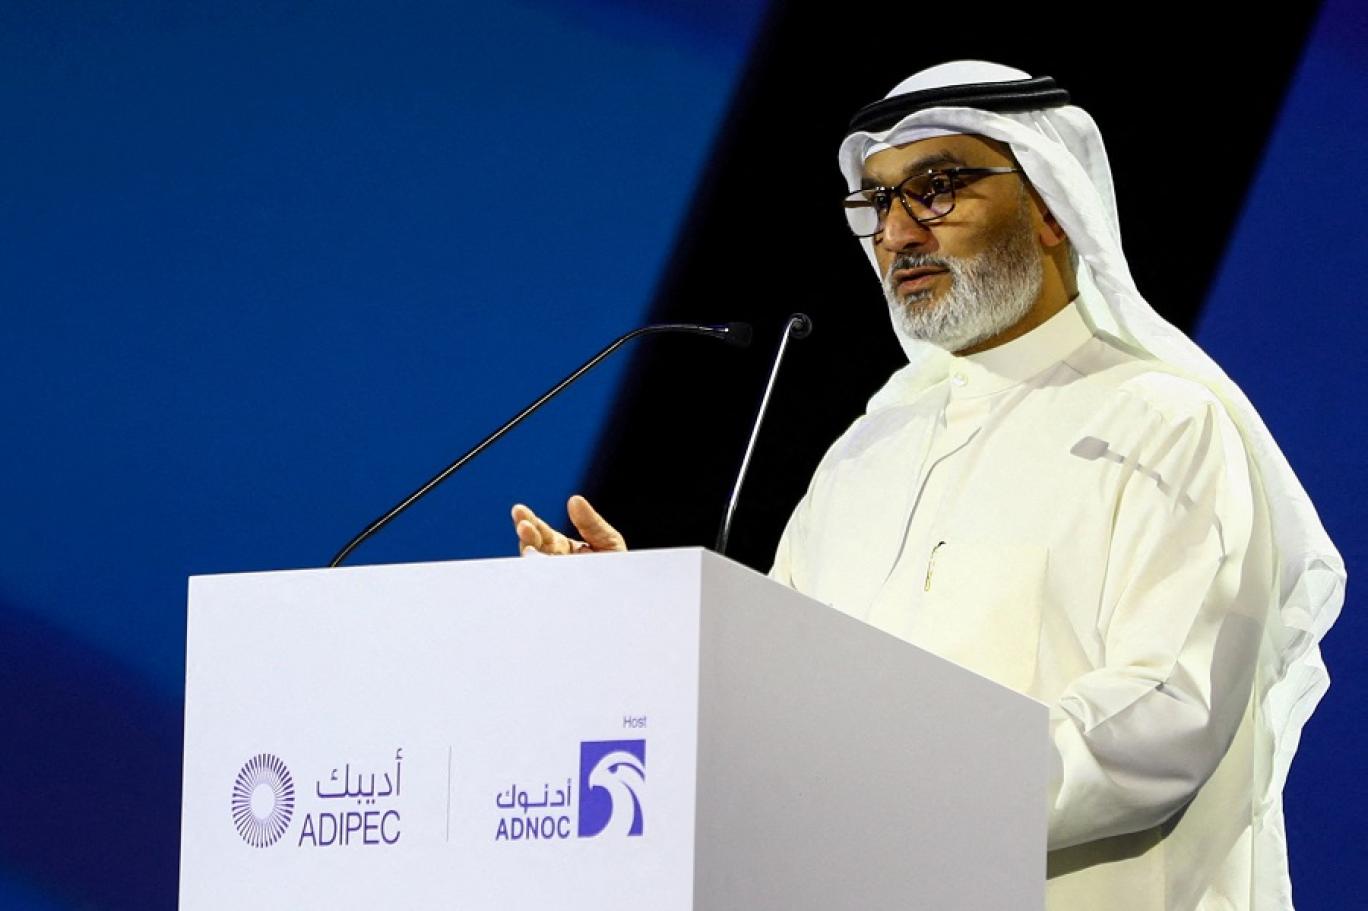 OPEC Secretary-General Haitham Al-Ghaid Affirms Organization's Commitment to Oil Price Stability